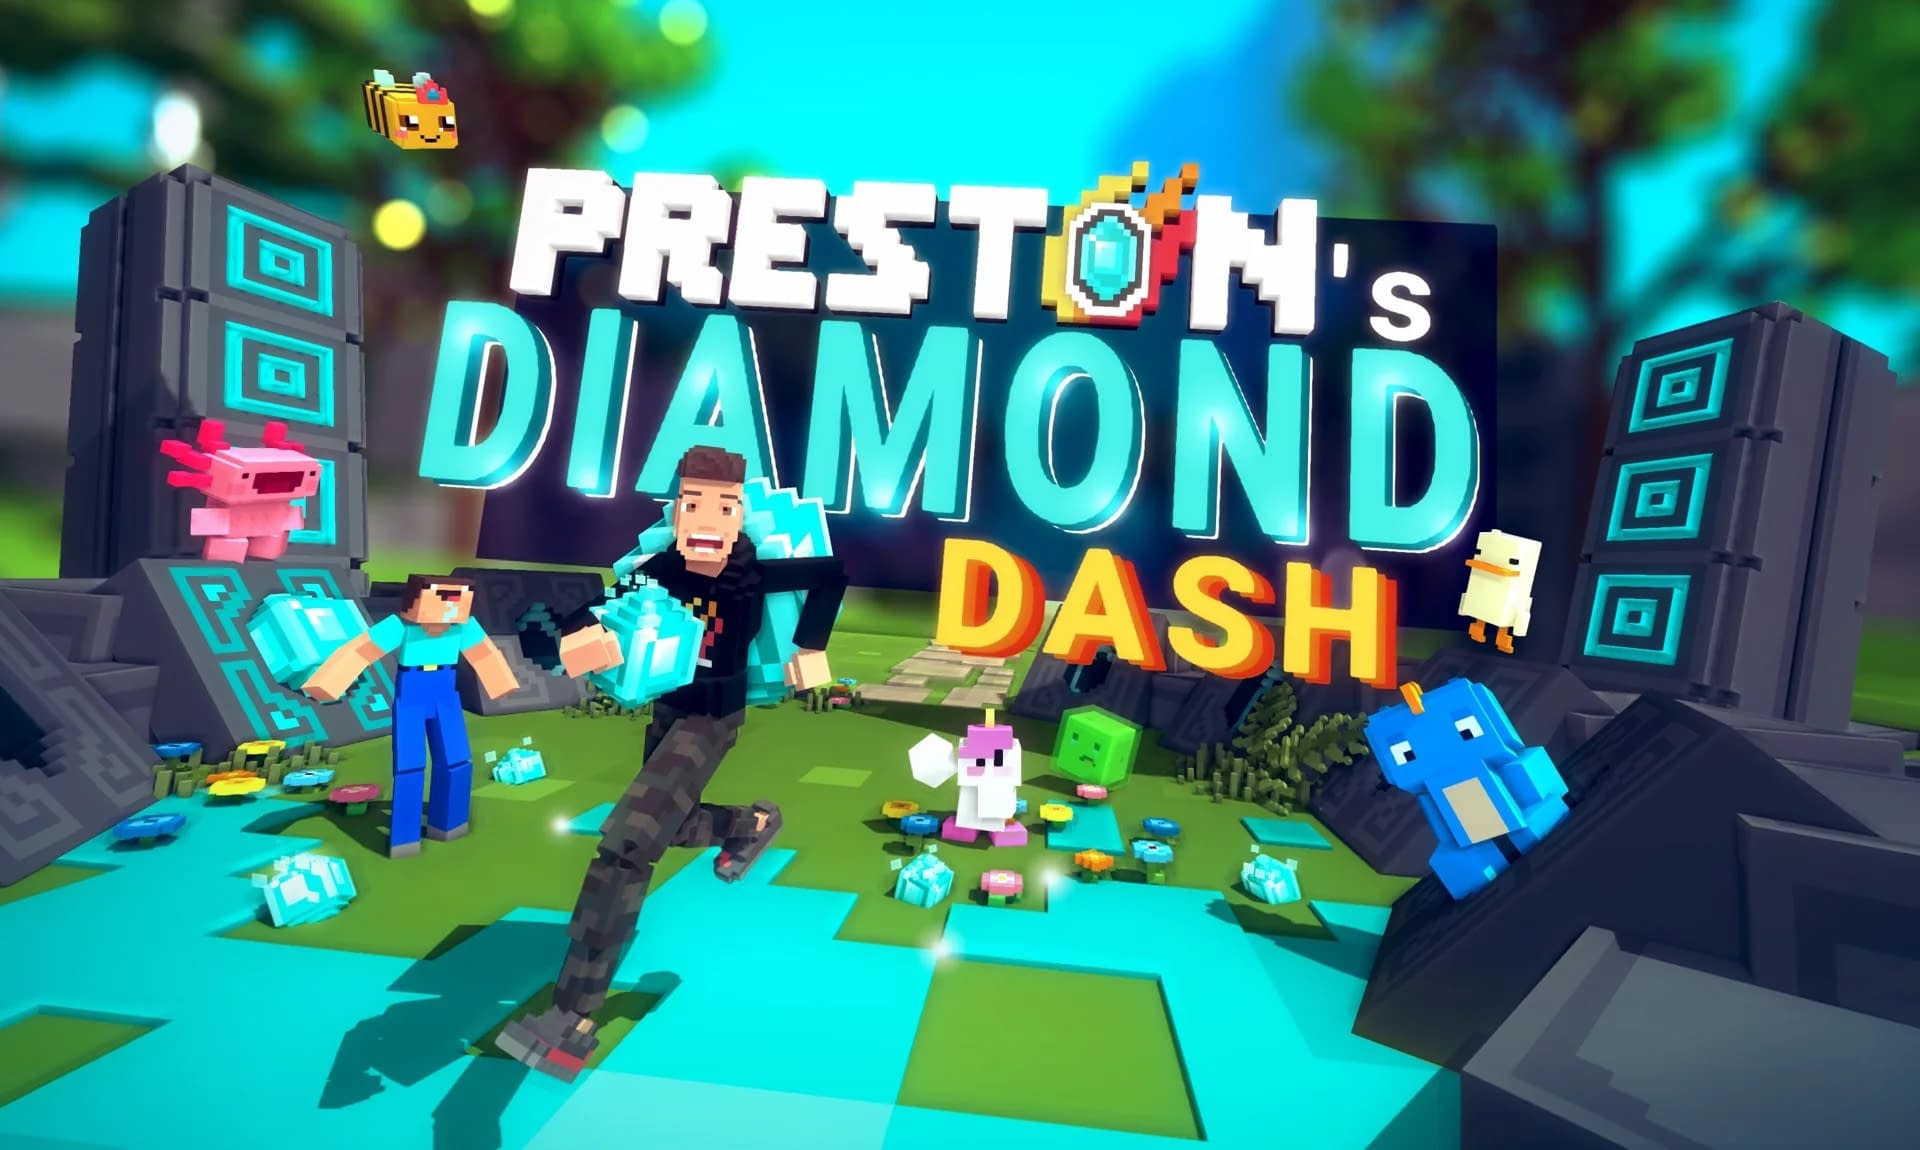 Diamond Drop Game - Free Download